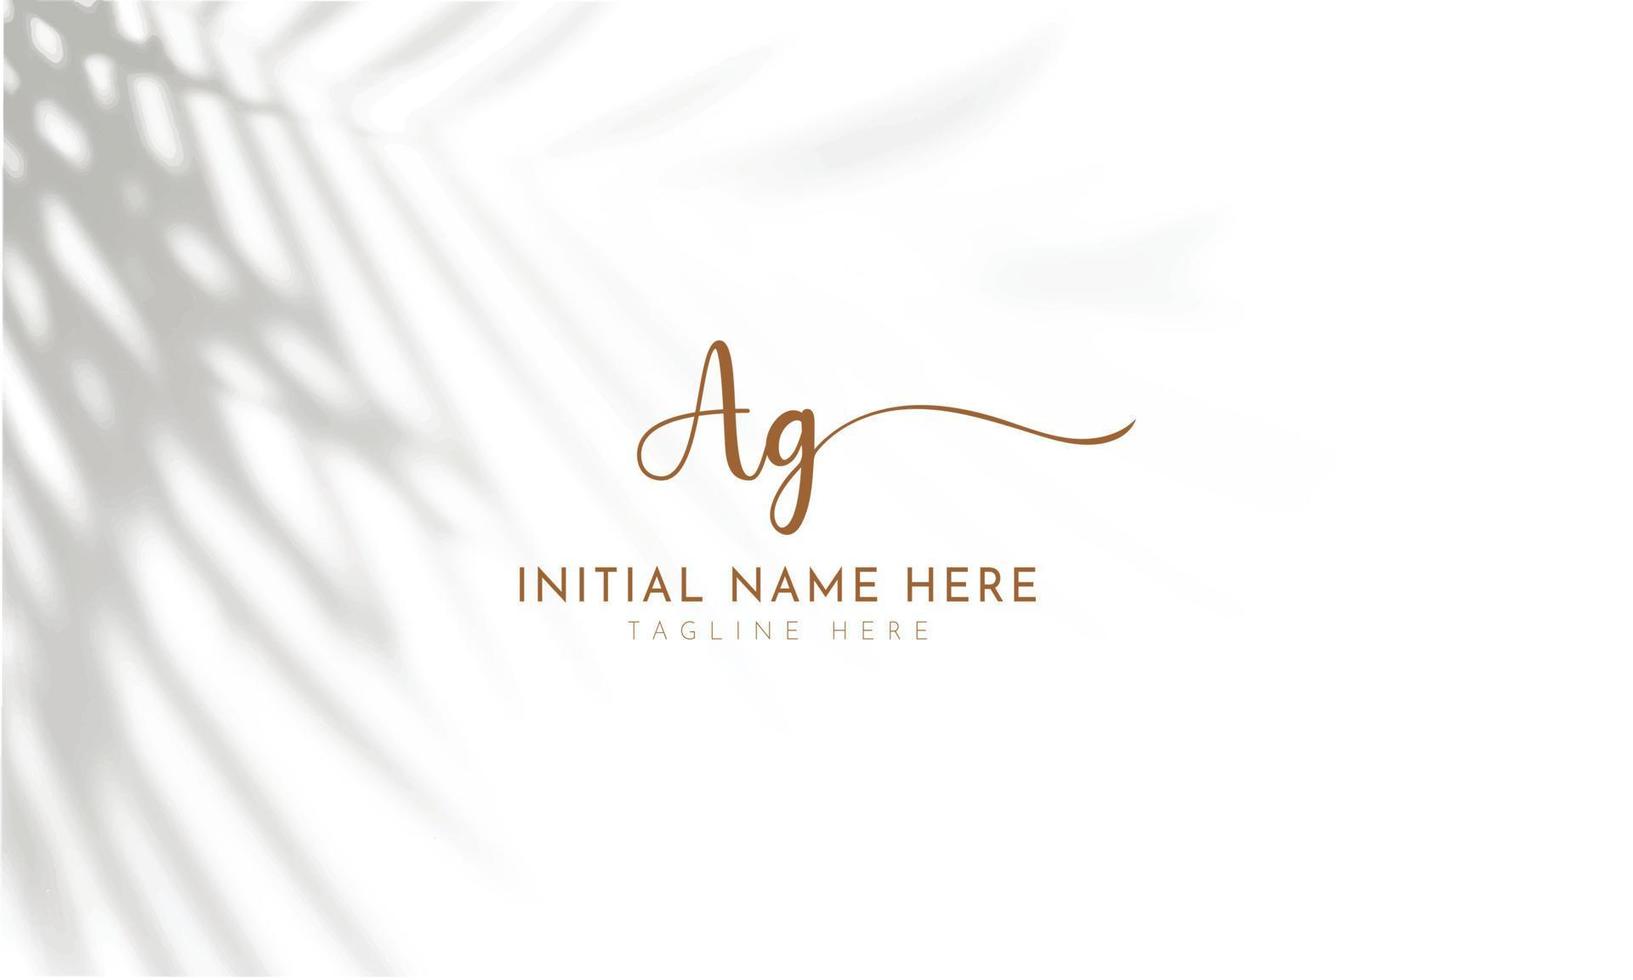 AG G A initial signature logo template vector